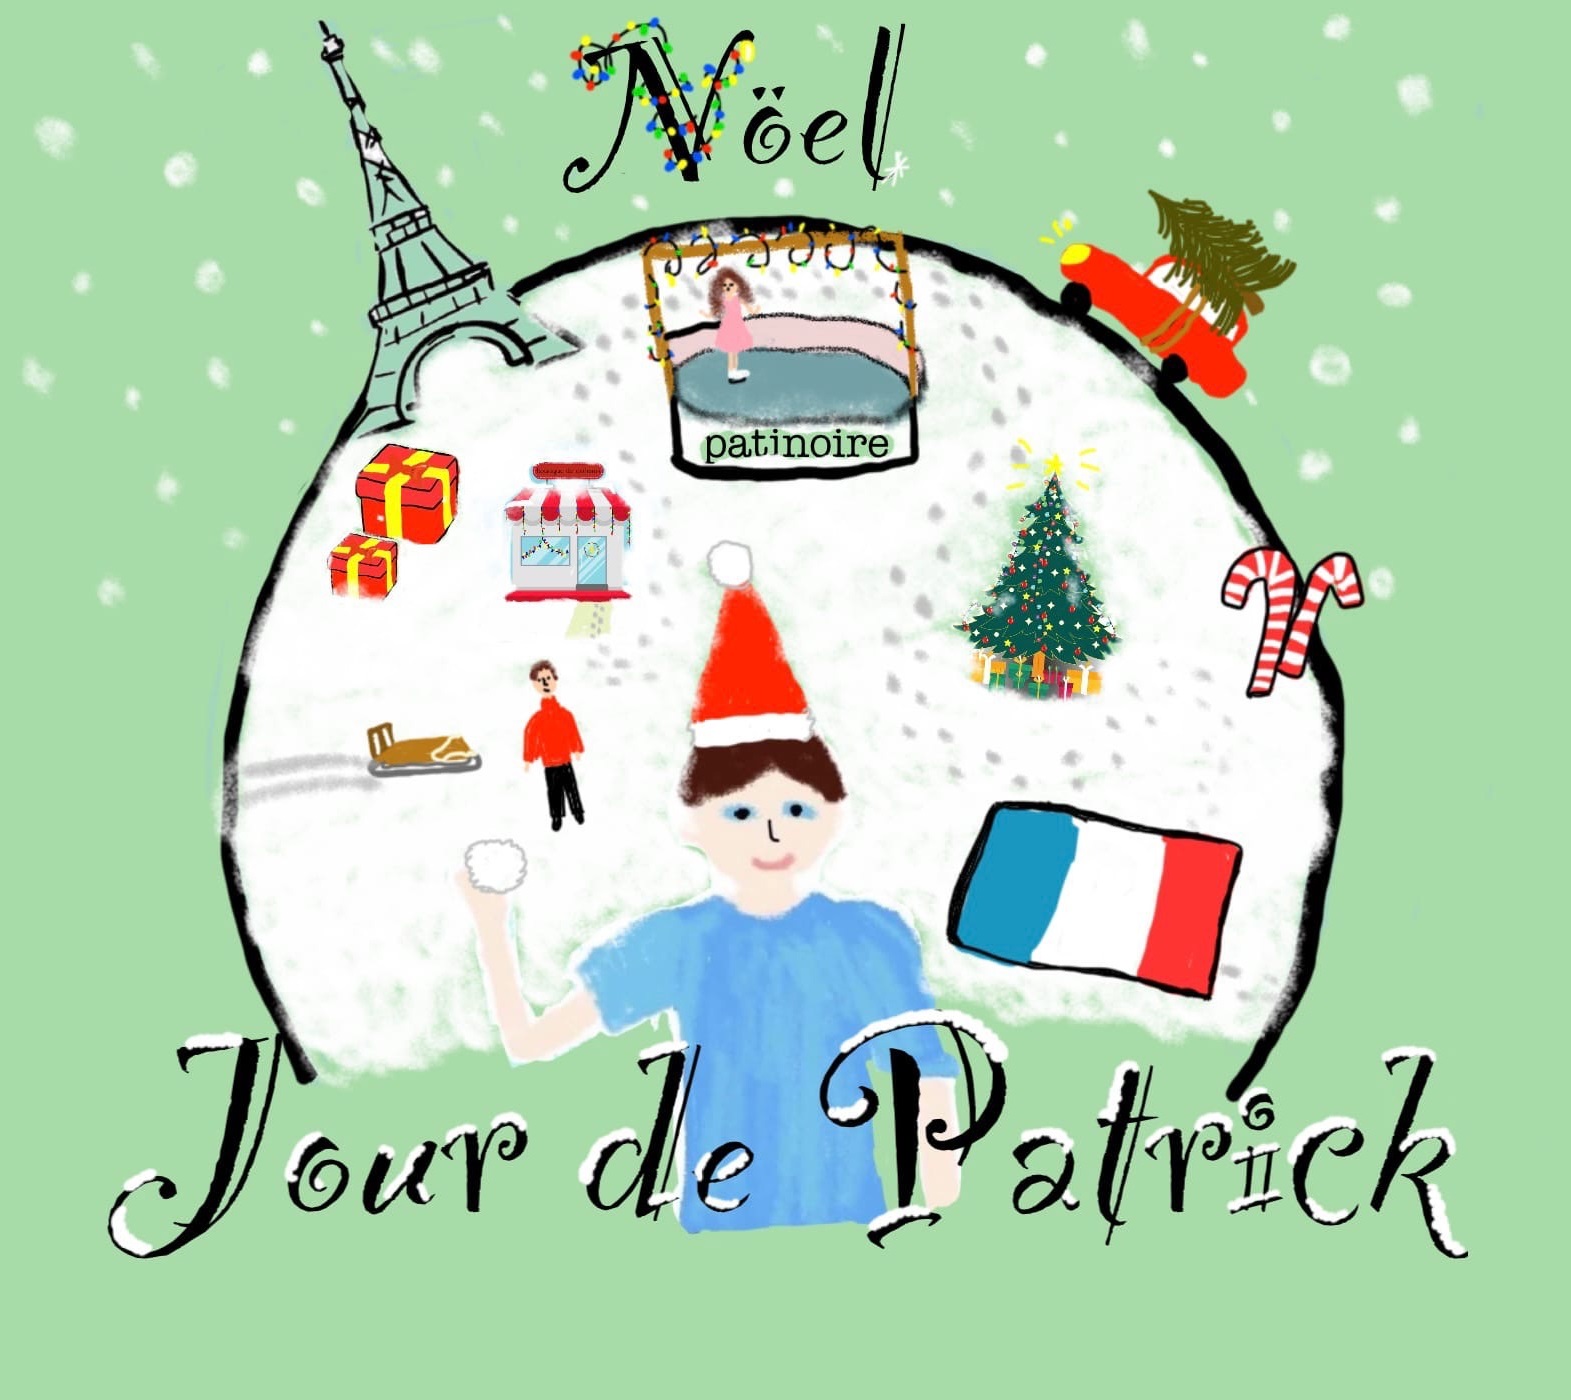 Текстовый квест Jour de Patrick - Noеl